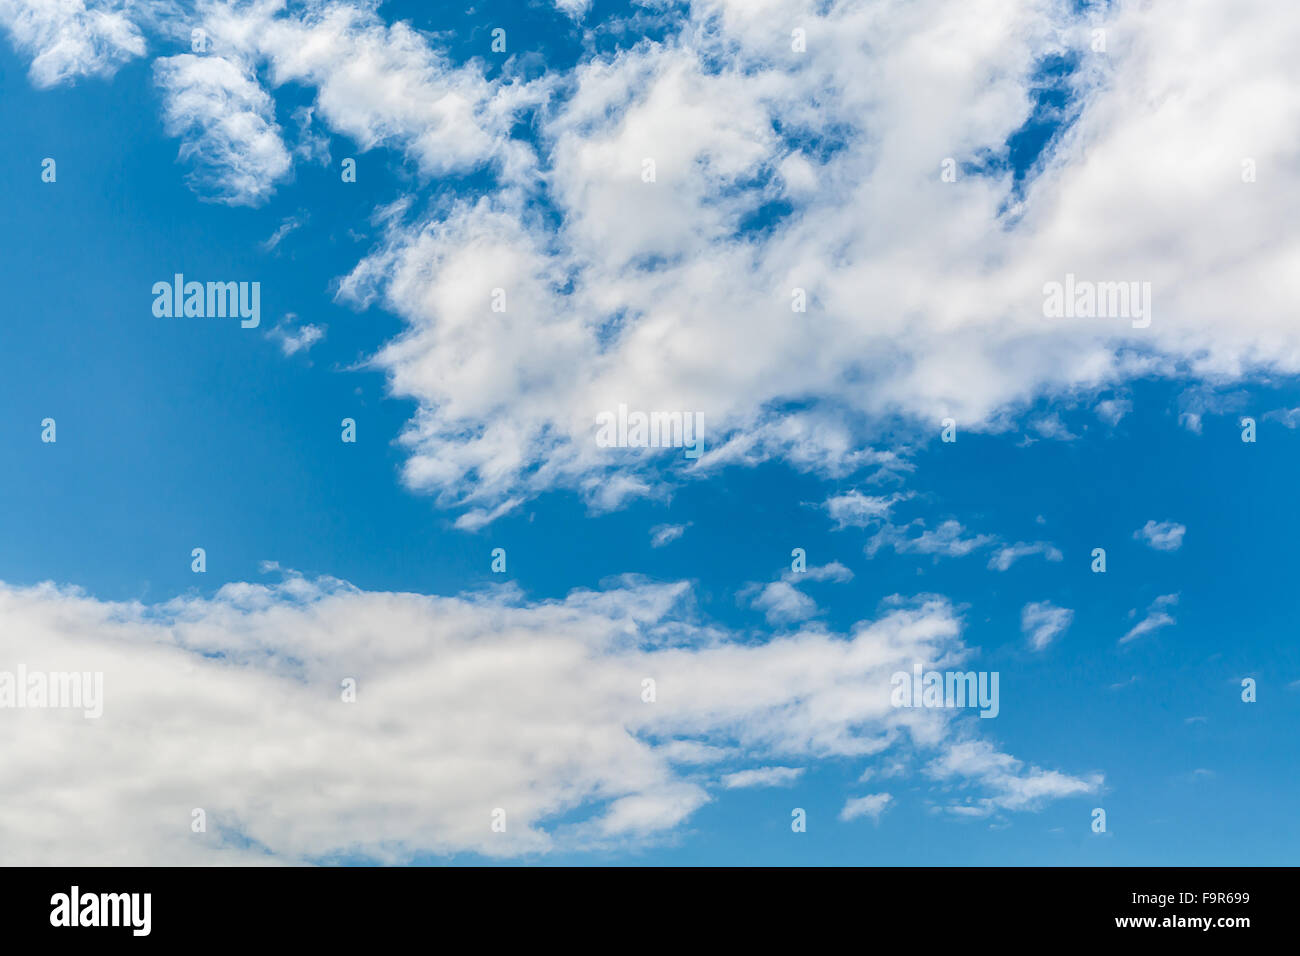 seem like fighting cloud in the sky Stock Photo